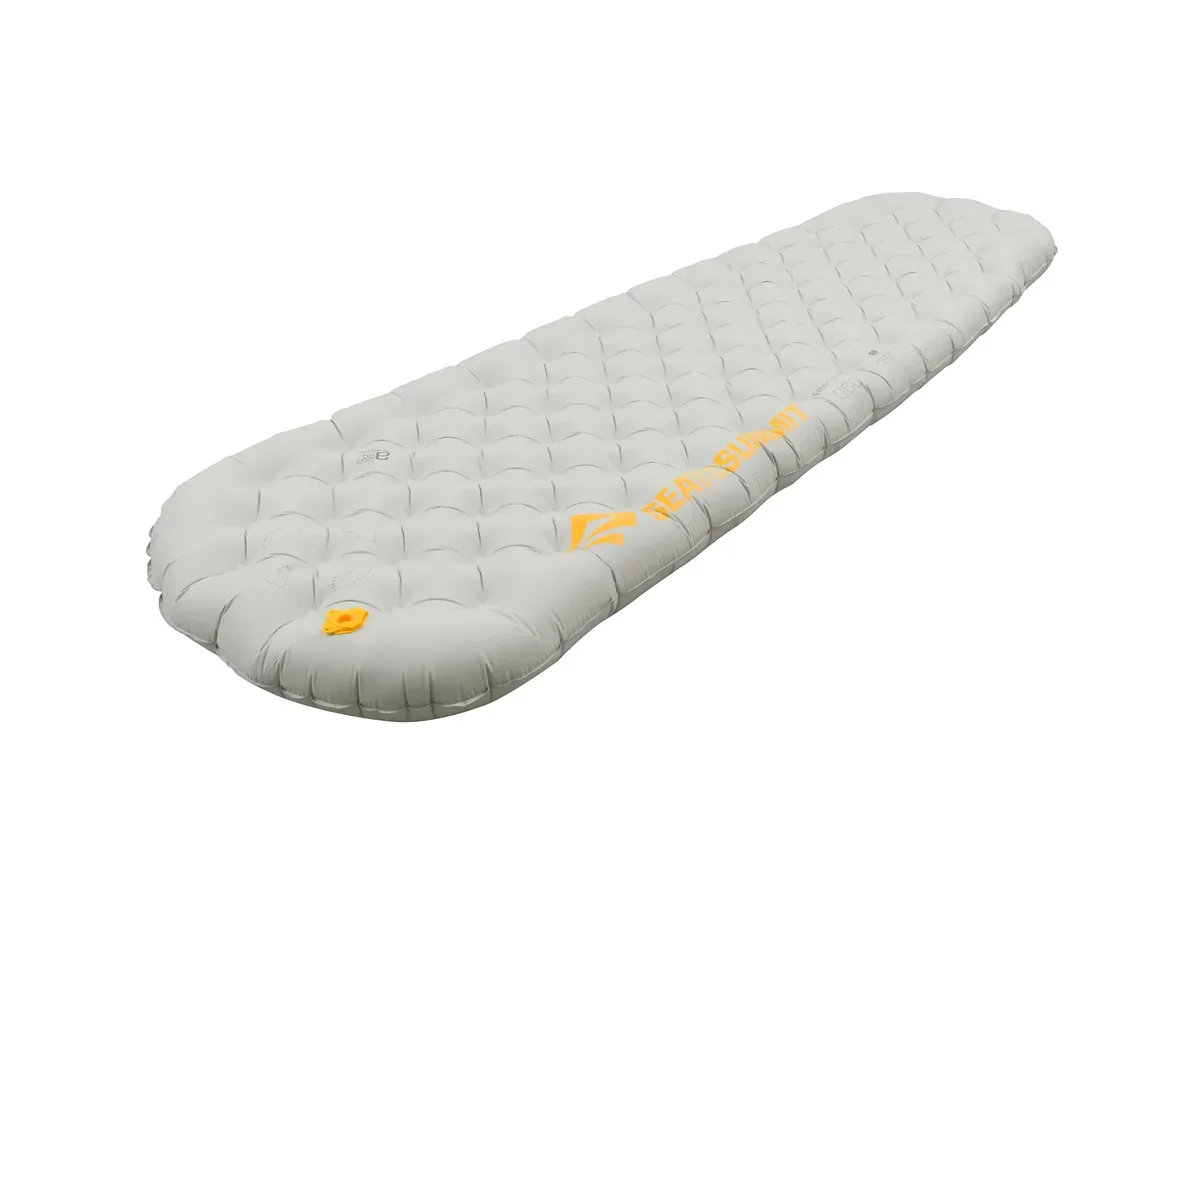 Lightweight-comfortable-quiet-air-sleeping-pad